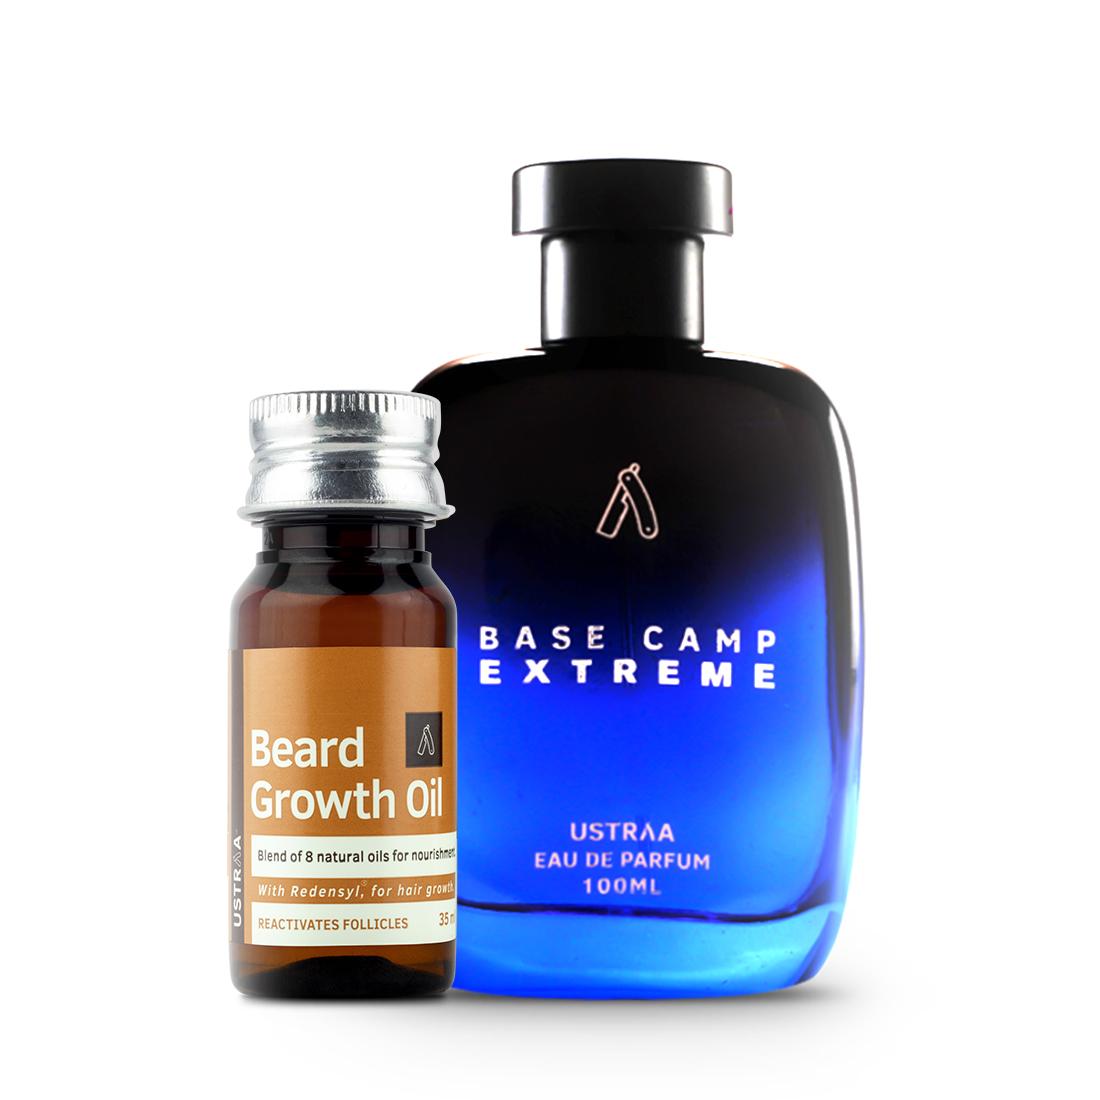 Base Camp Extreme EDP - Perfume for Men & Beard Growth Oil